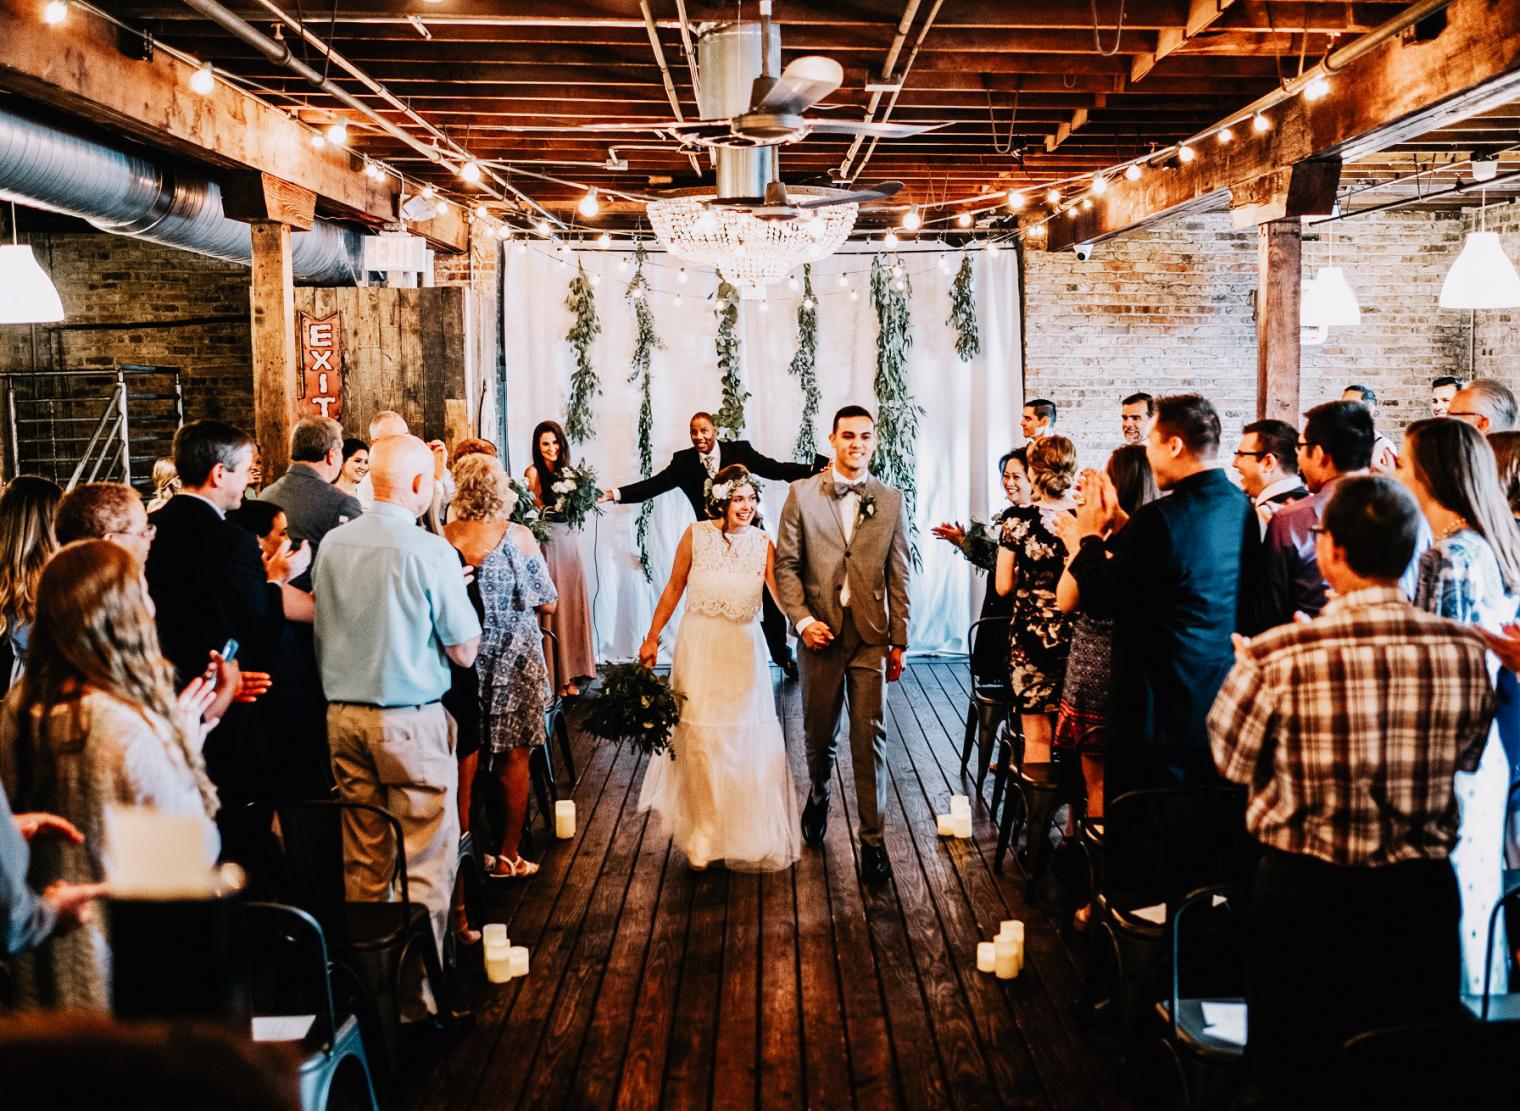 18 of the Dreamiest Wedding Venues Across Illinois